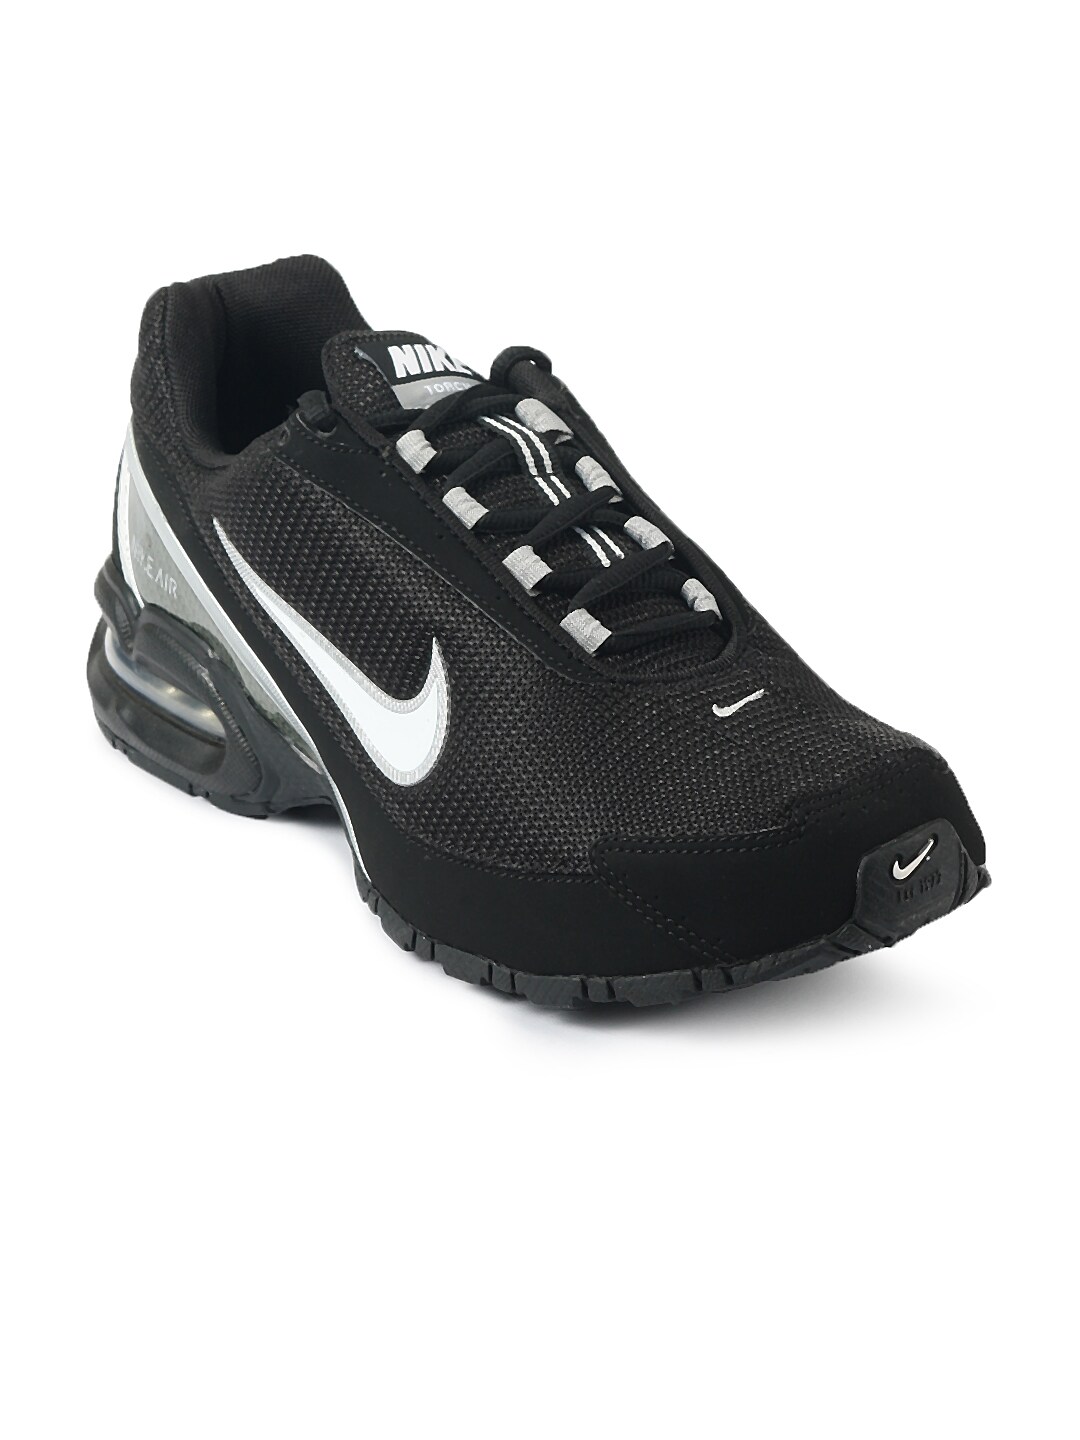 Nike Men Air Max Torch Black Sports Shoes